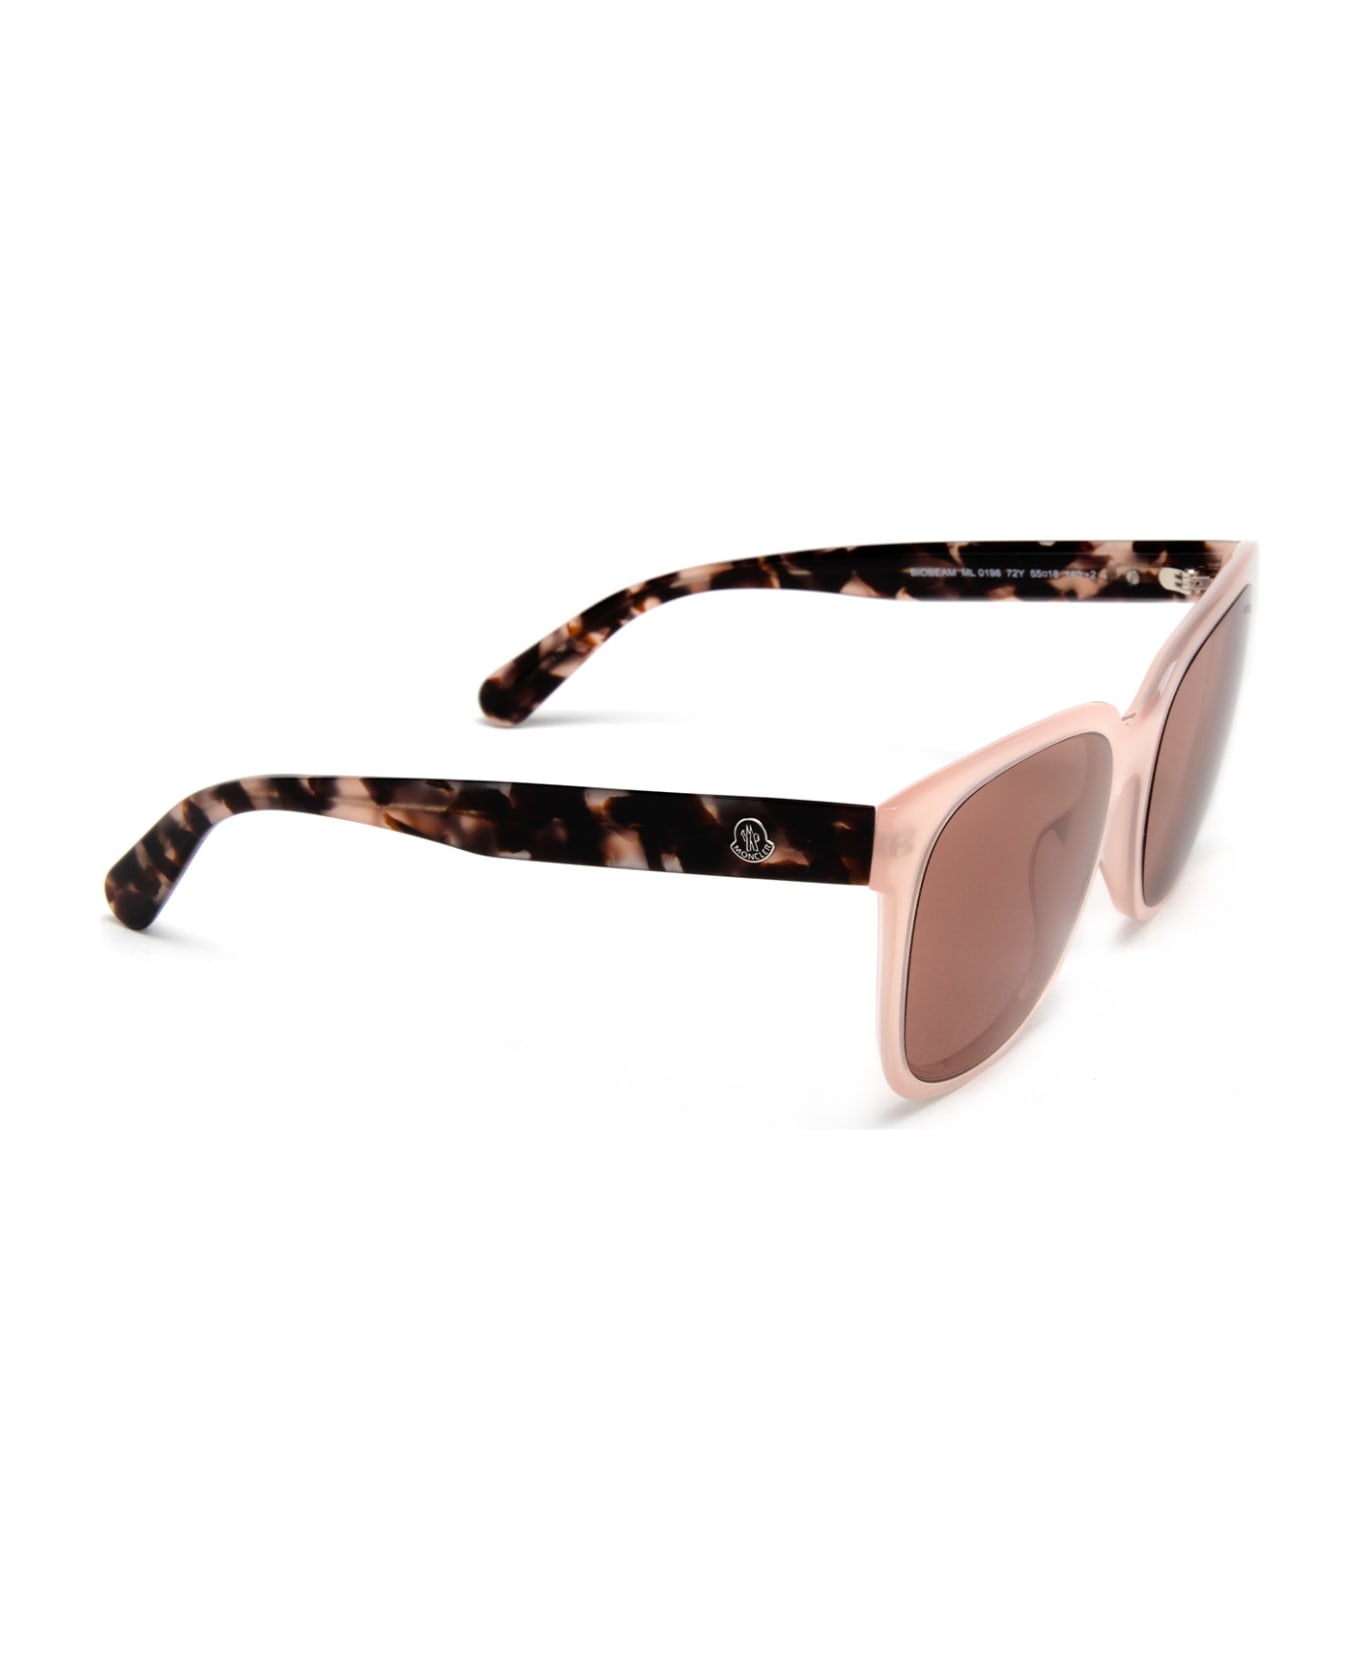 Moncler Eyewear Ml0198 Shiny Pink Sunglasses - Shiny Pink